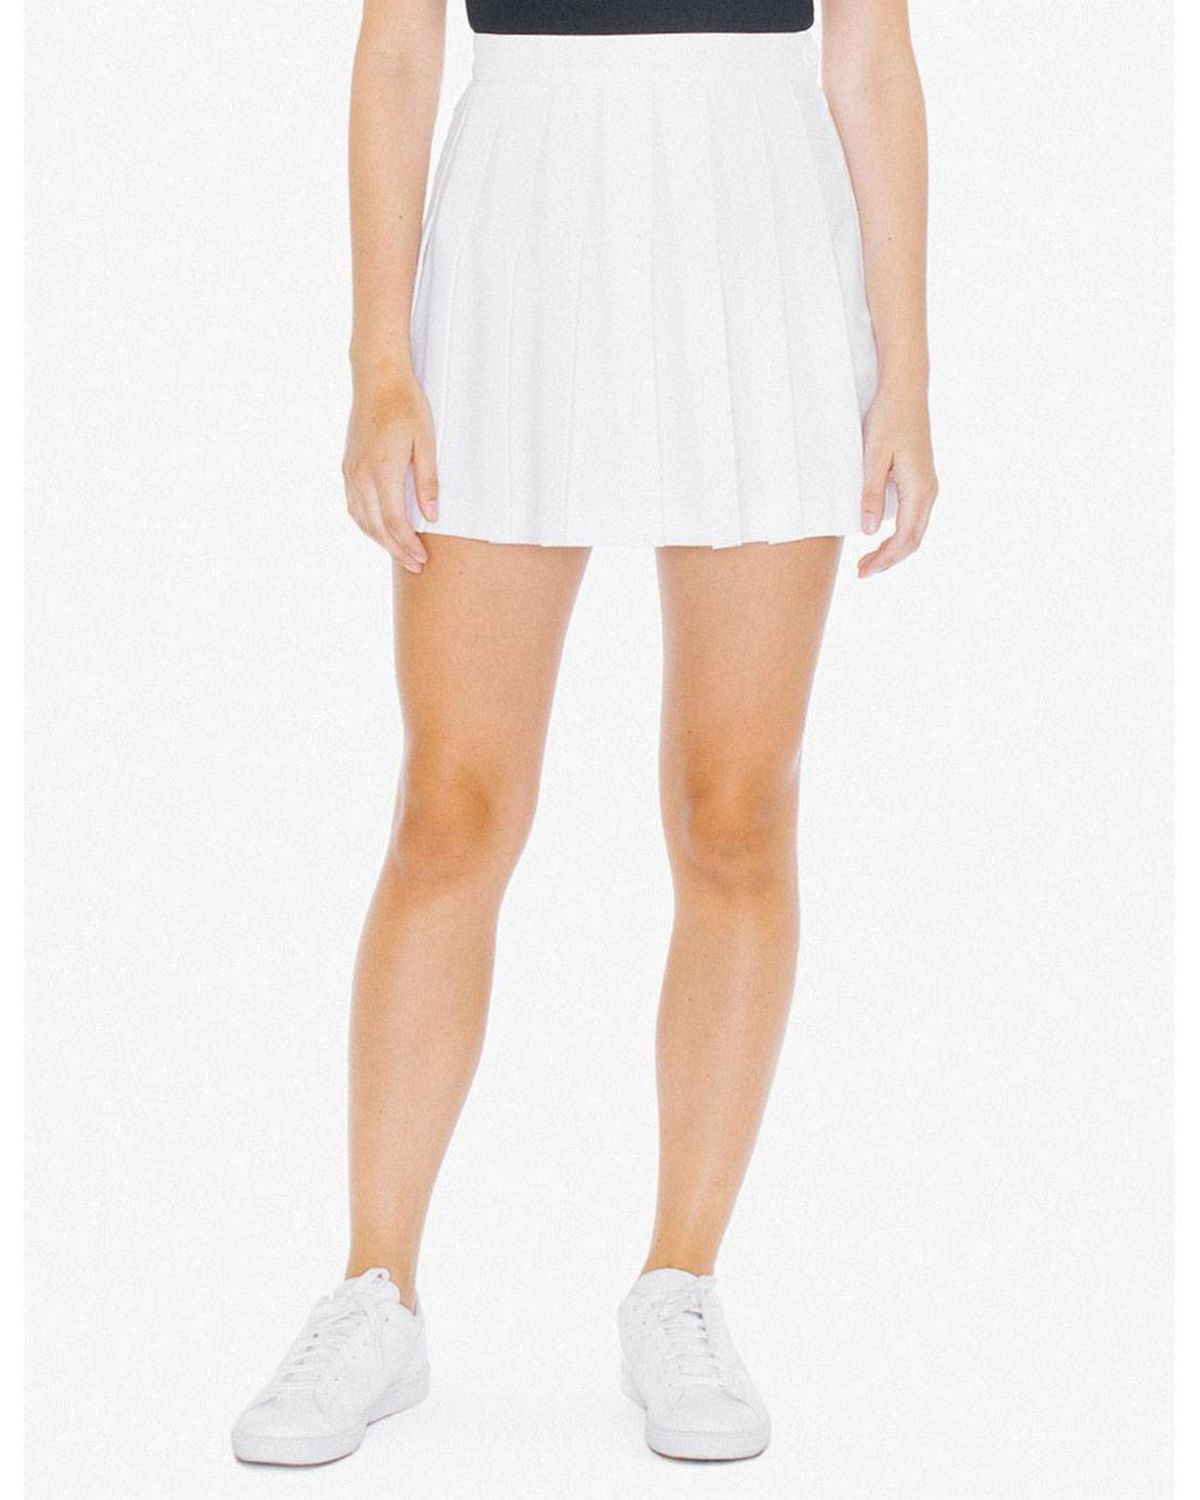 American Apparel AGB300W Ladies Tennis Skirt